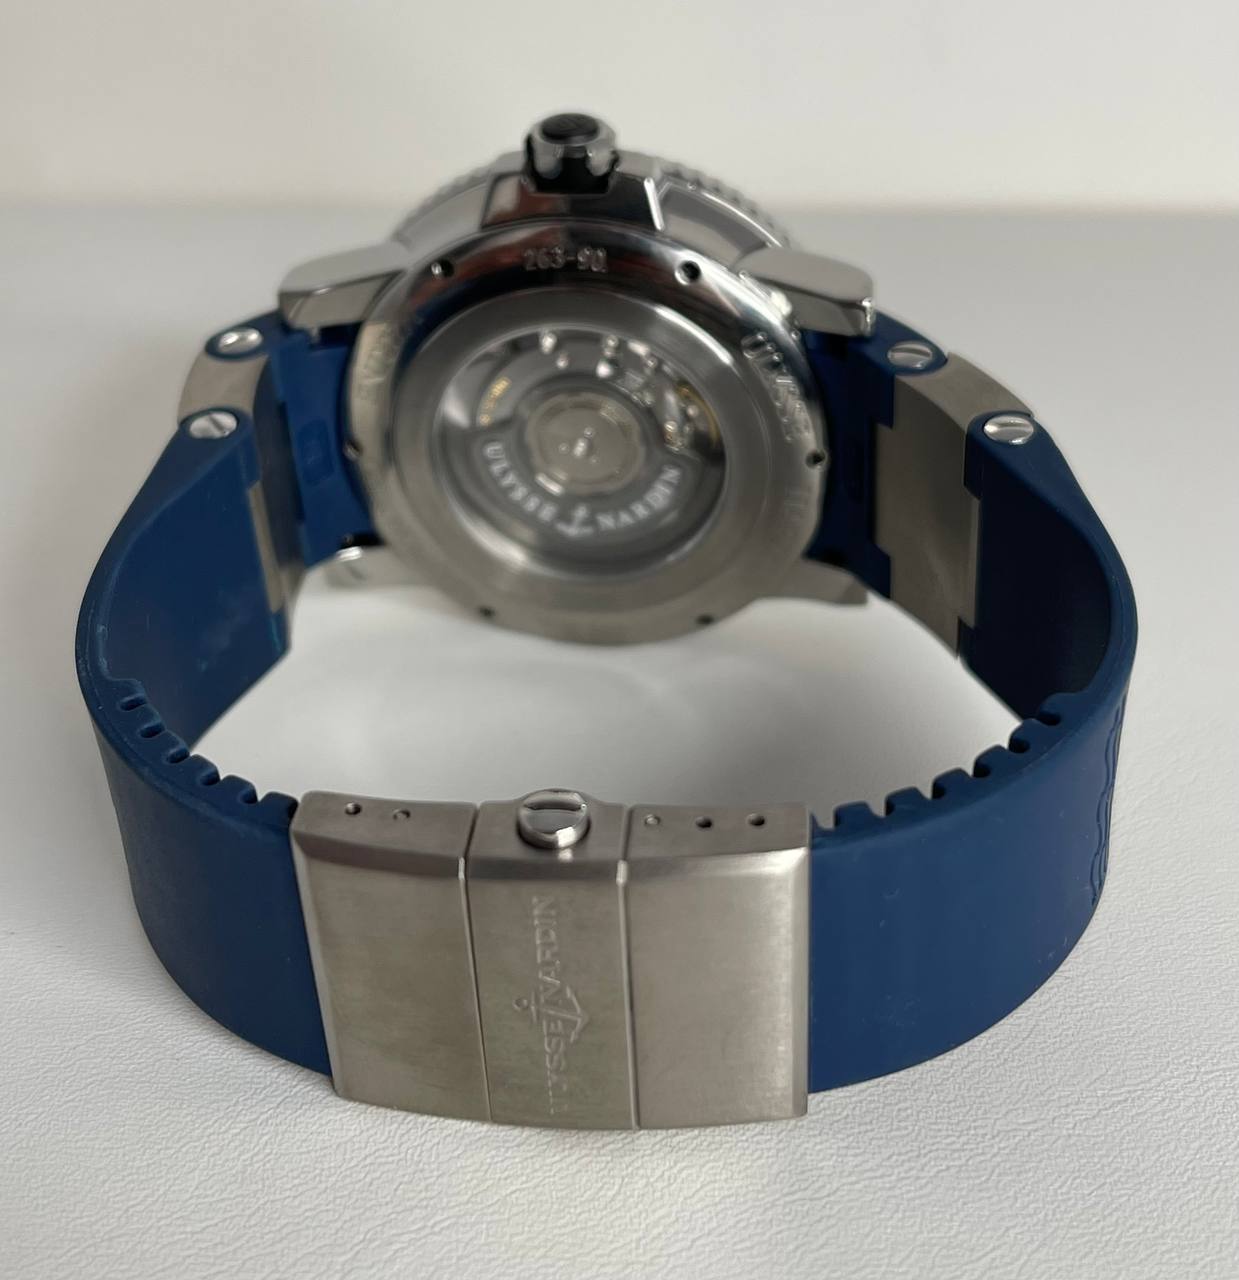 Часы Ulysse Nardin Diver Maxi Marine 263-90